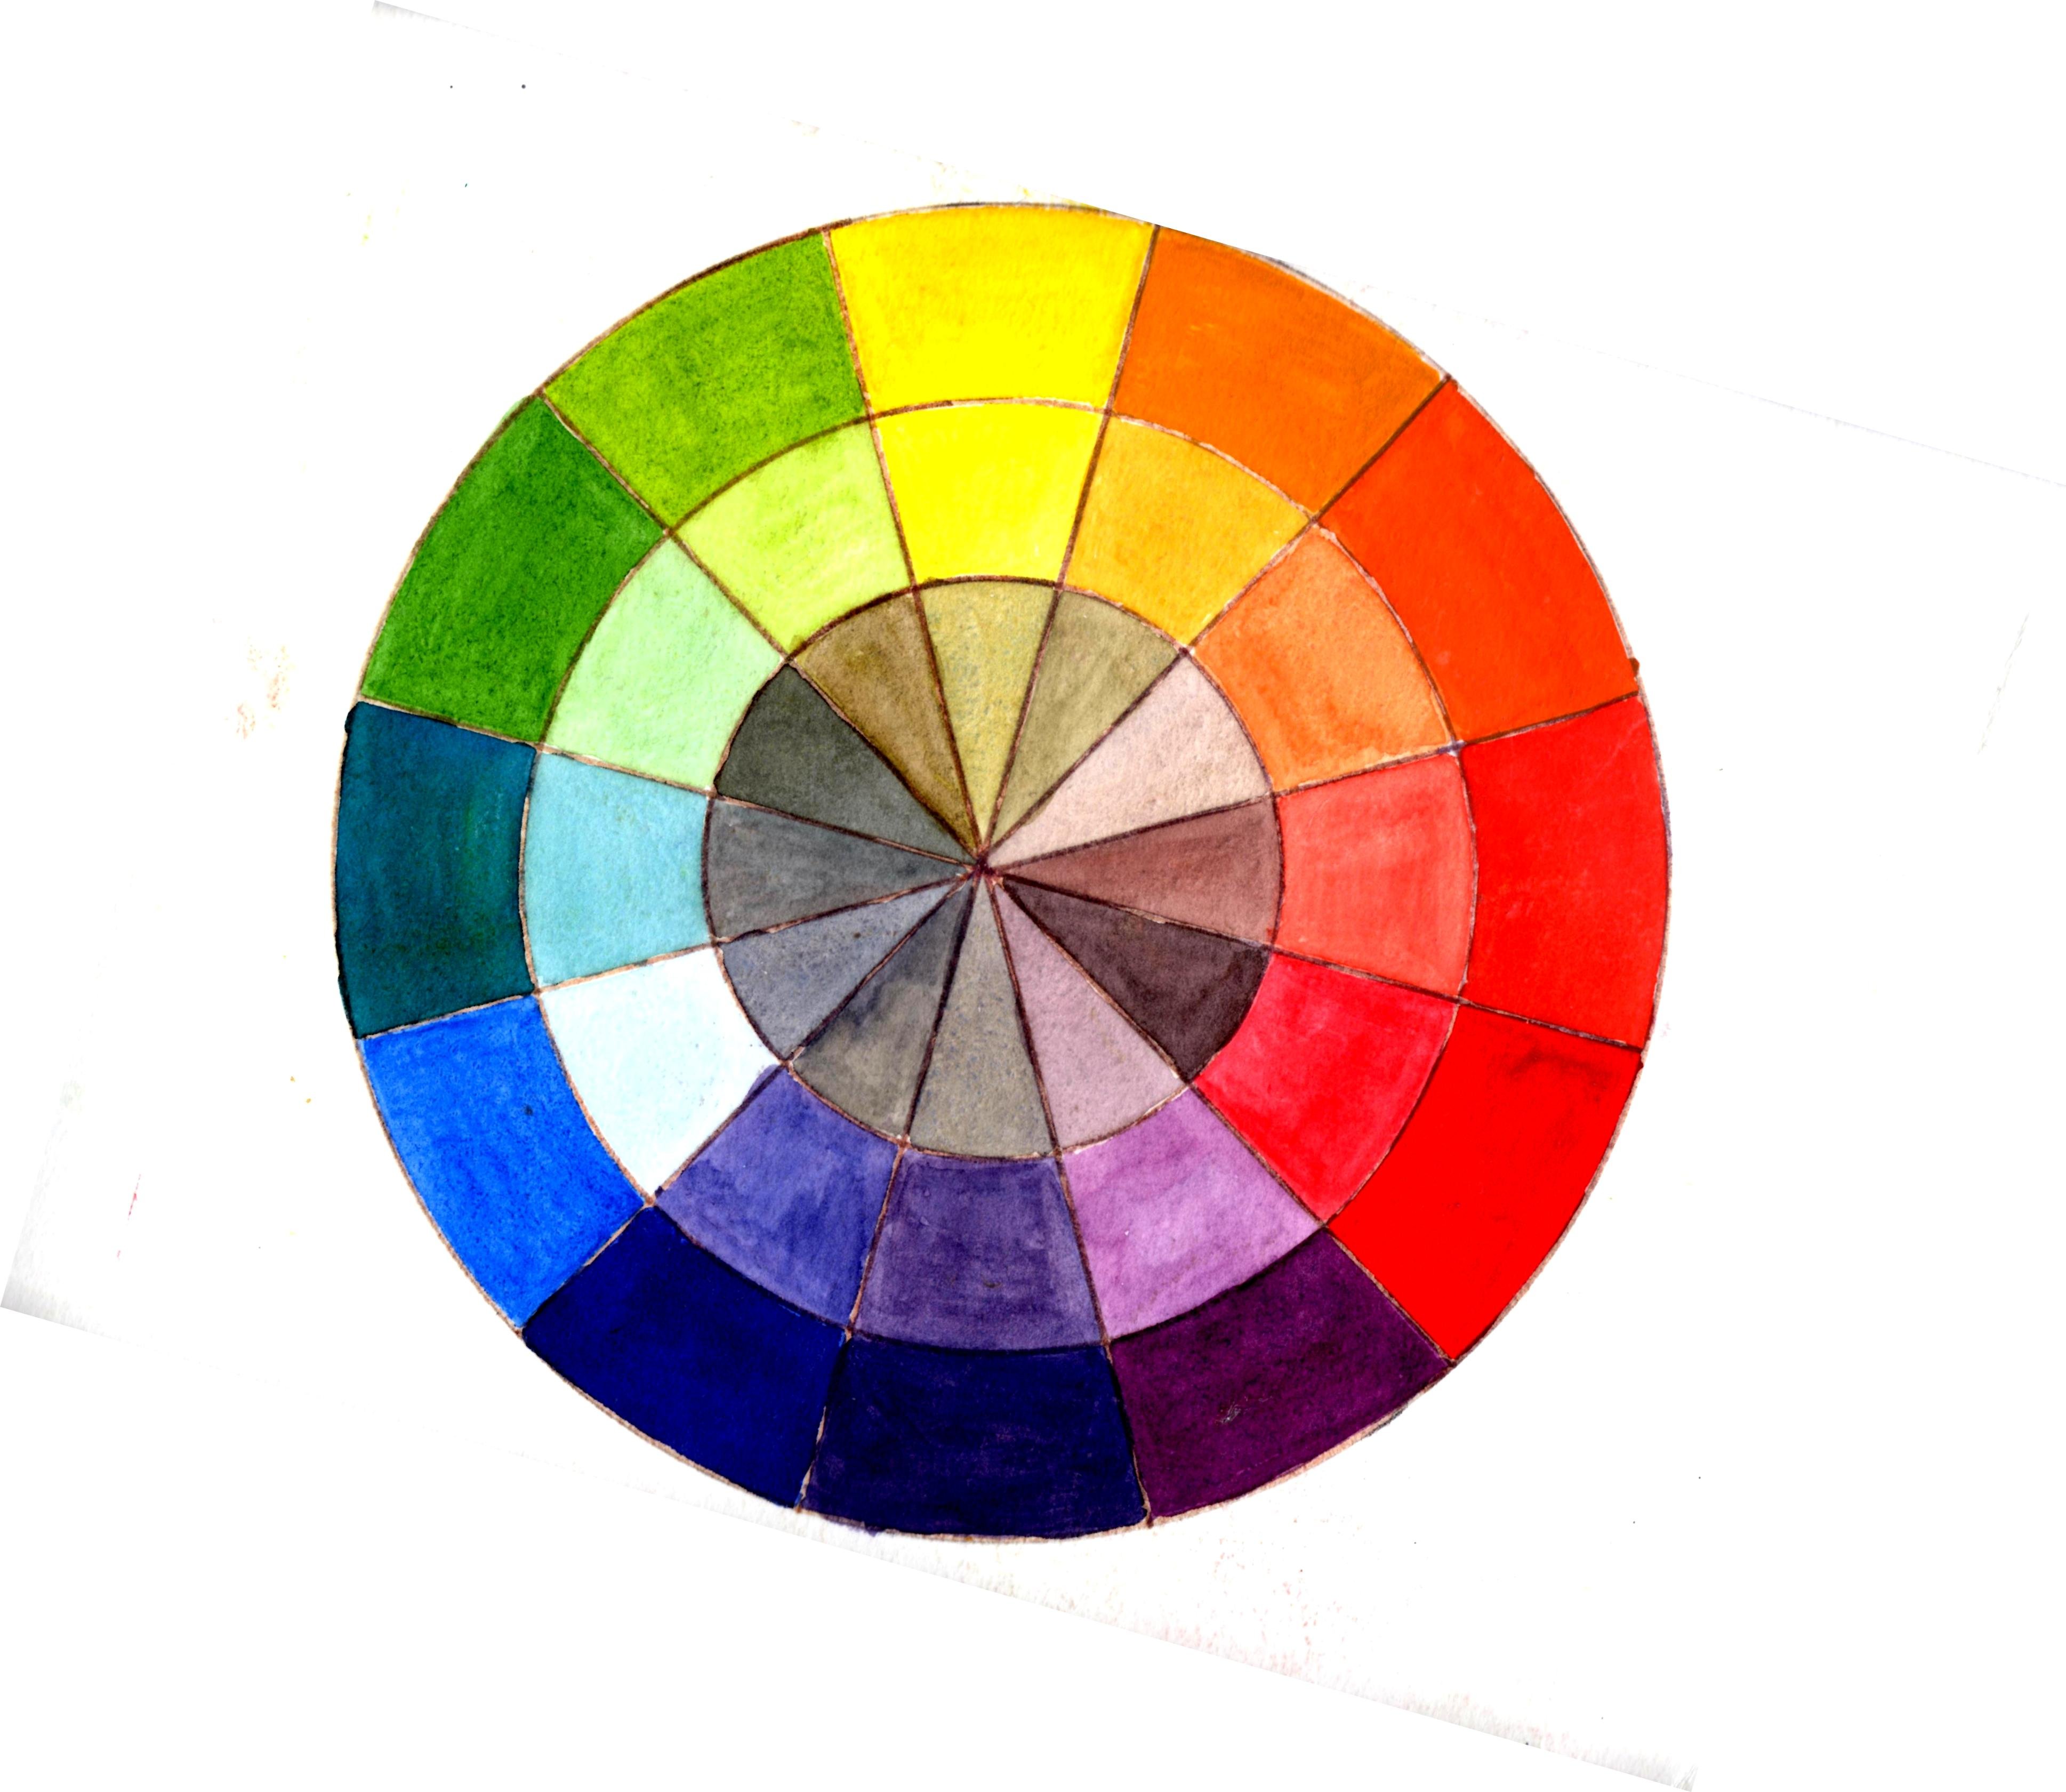 Цветогамма. Цветовой круг Иоханнеса Иттена. Цветовой круг Иттена акварелью. Цветовой круг Иттена 12 цветов. Иоганнес Иттен цветовой круг.